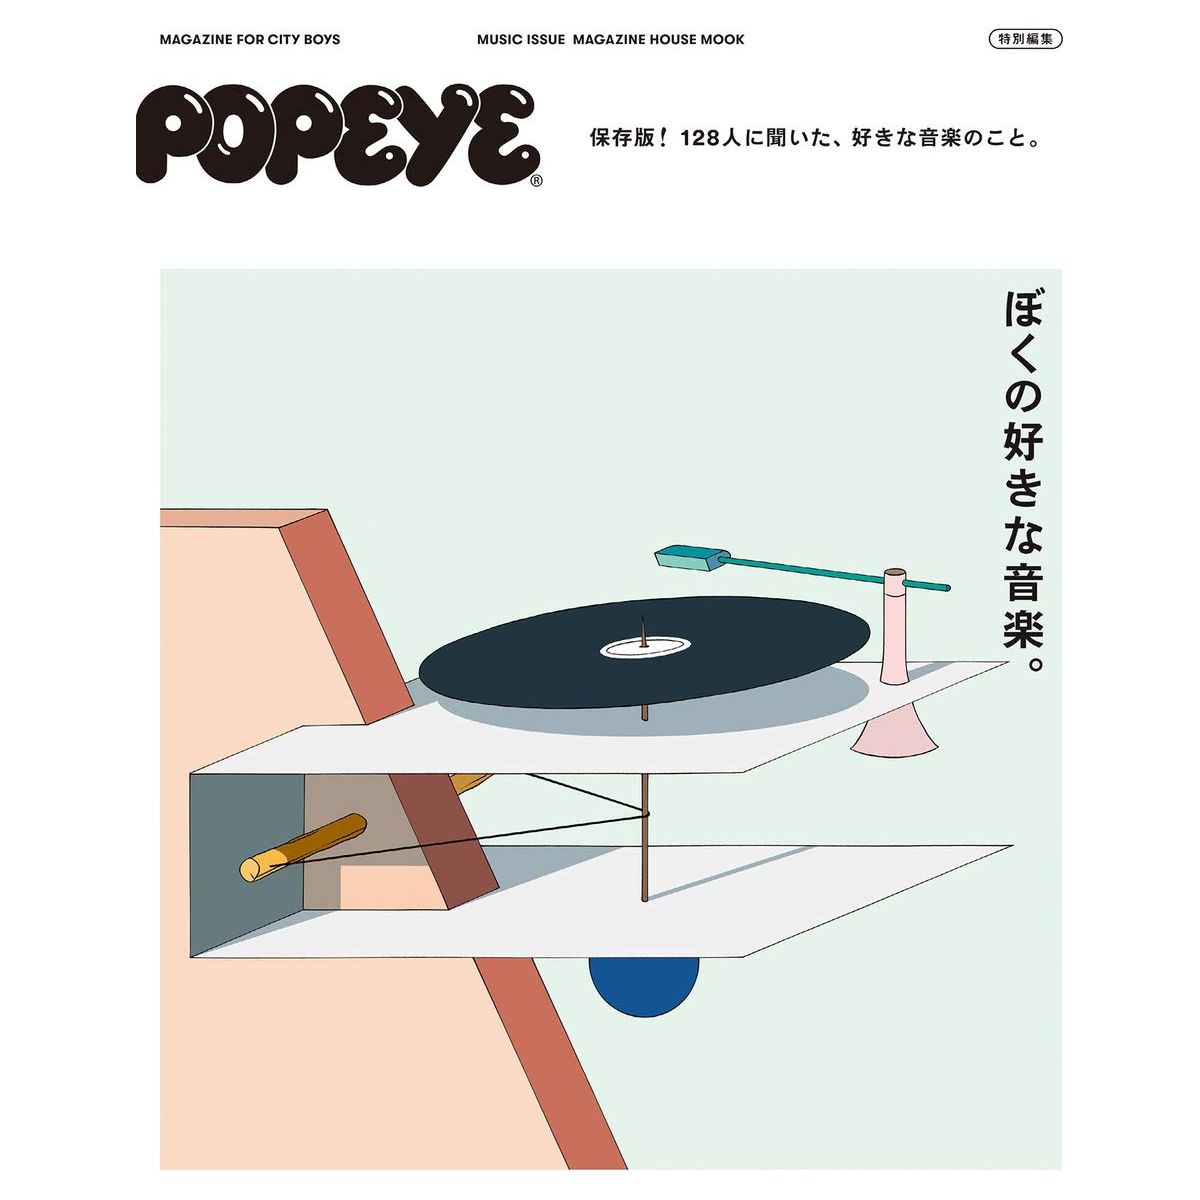 Popeye Music Issue